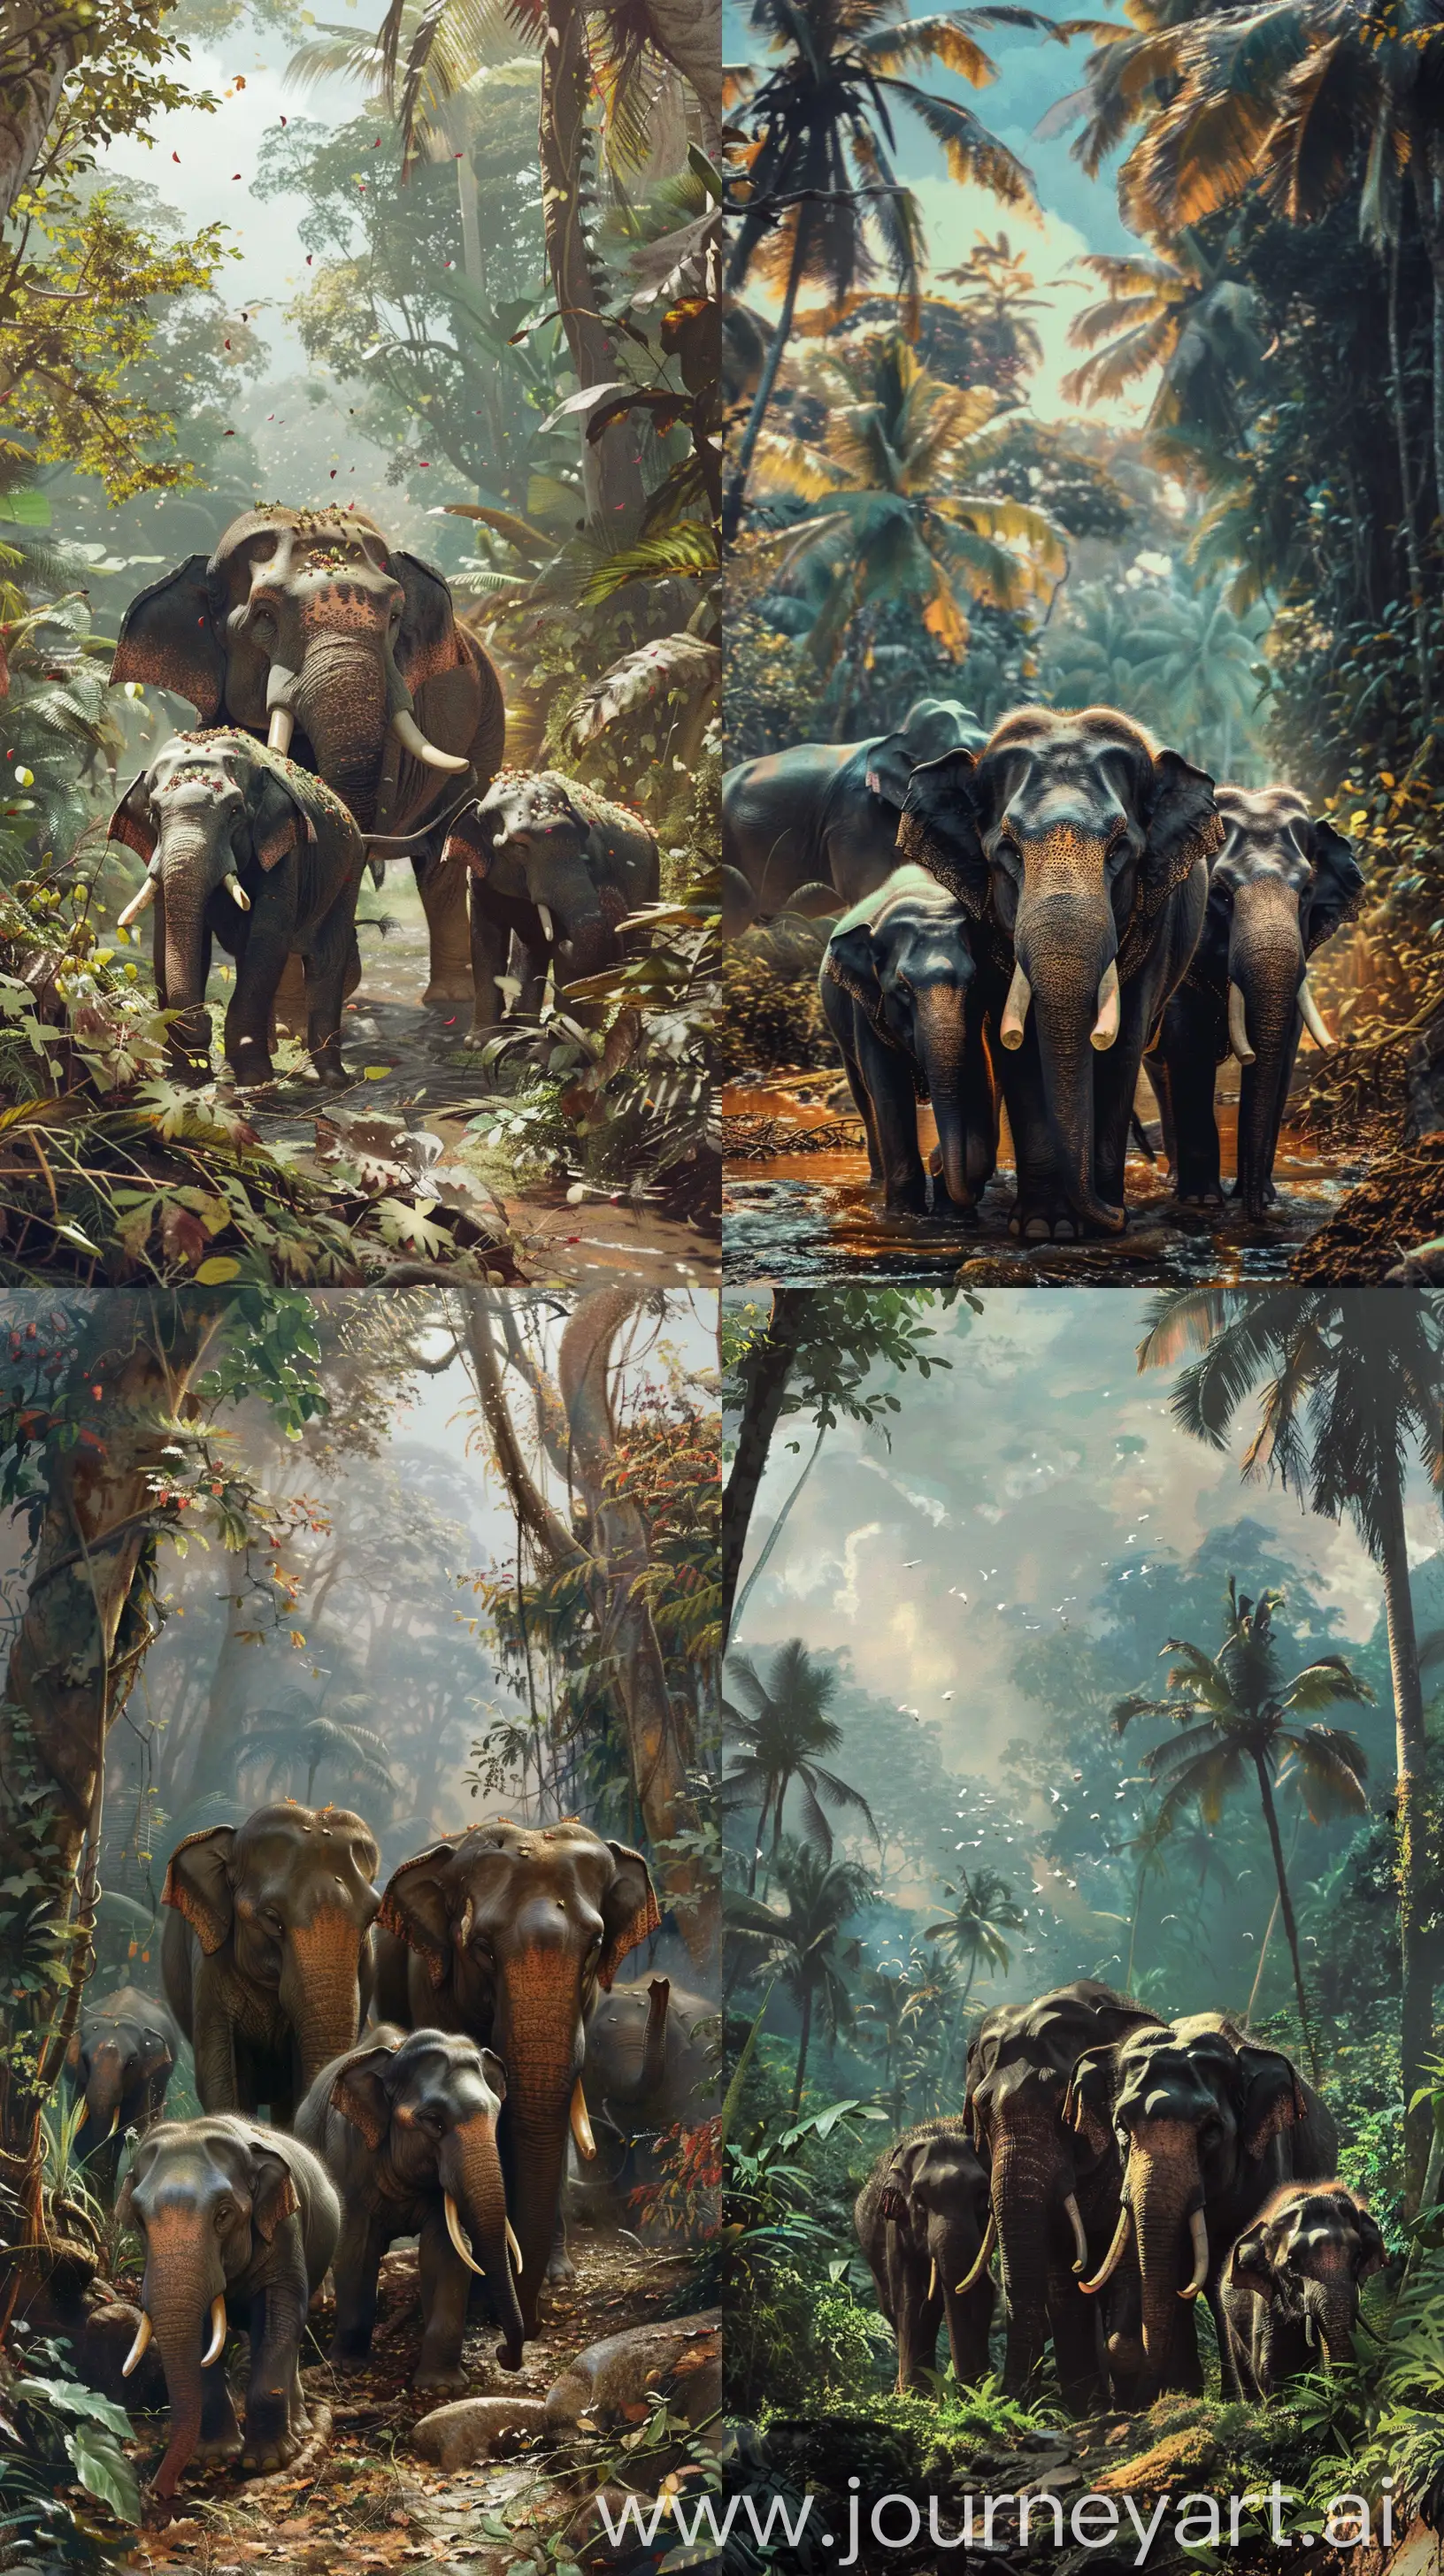 Image of a group of wild elephants, in the jungle, Raj Ravi Varma art style, 8k quality, intricate details --ar 9:16 --v 6